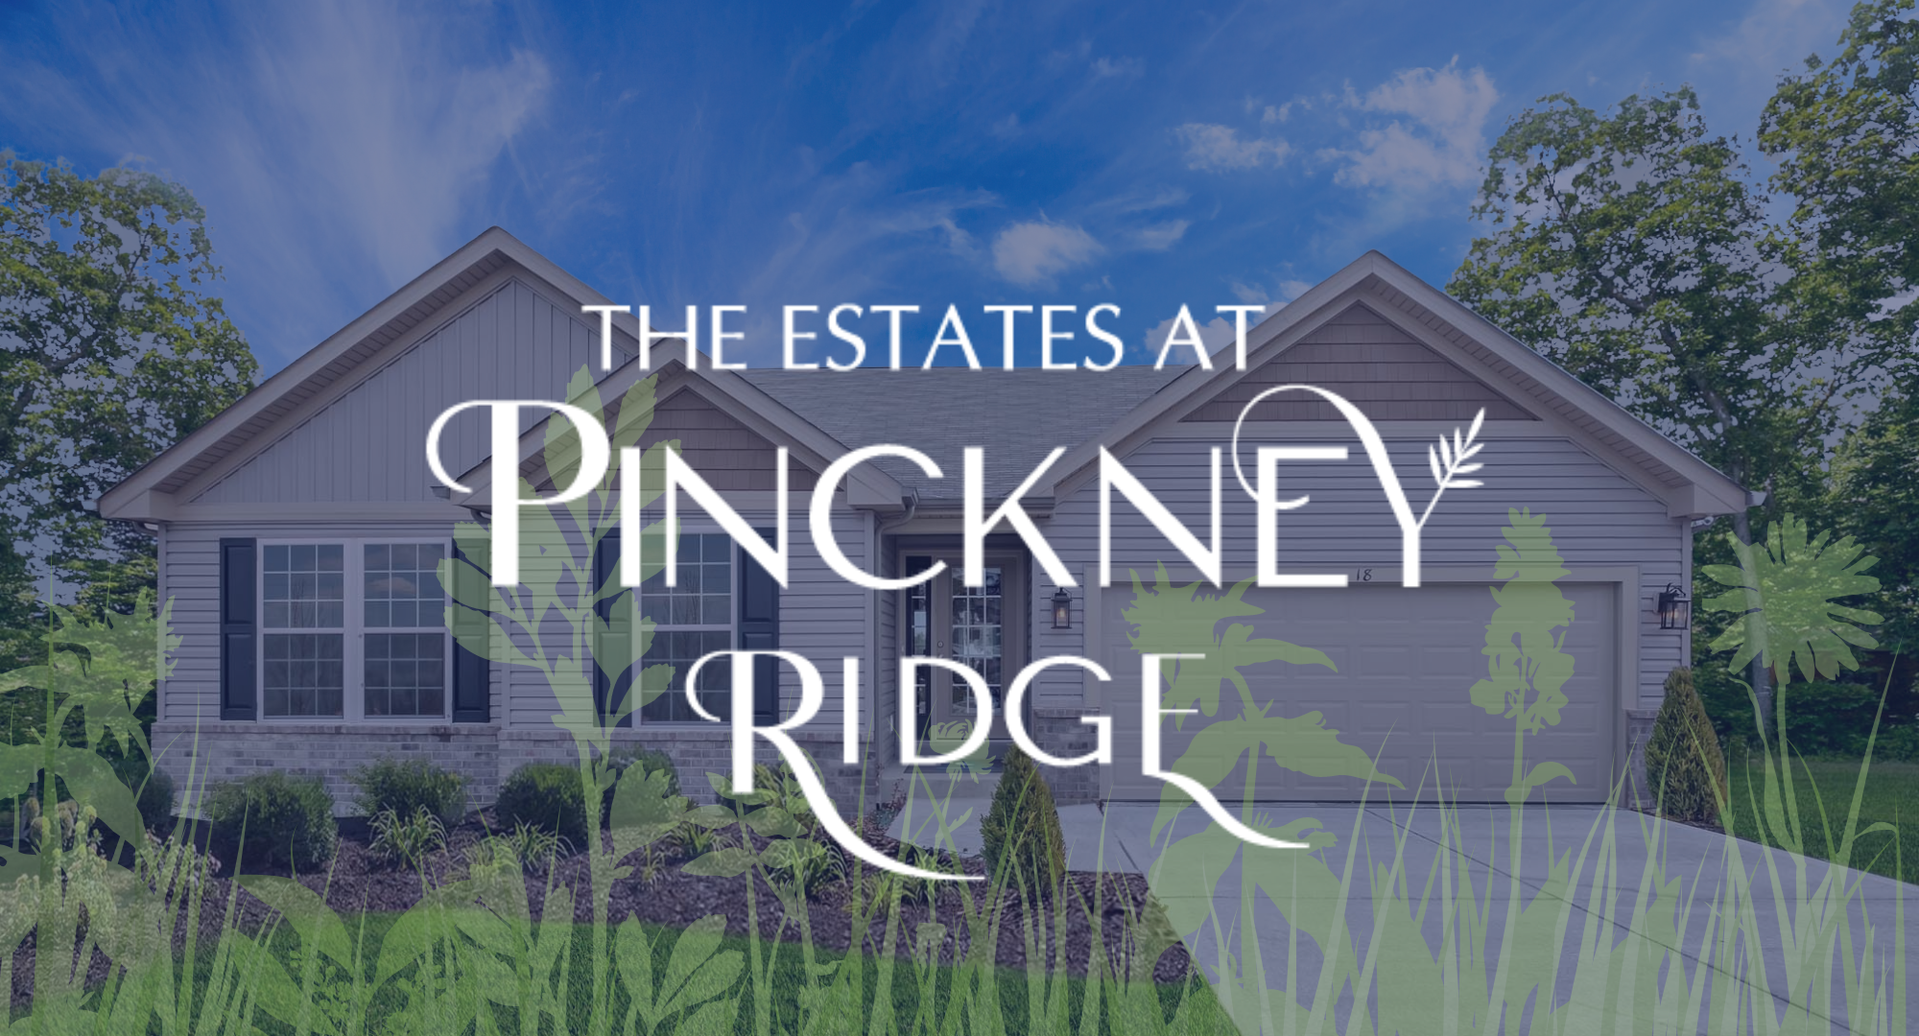 The Estates at Pinckney Ridge - New Homes Warrenton, MO. New Homes in Warrenton, MO